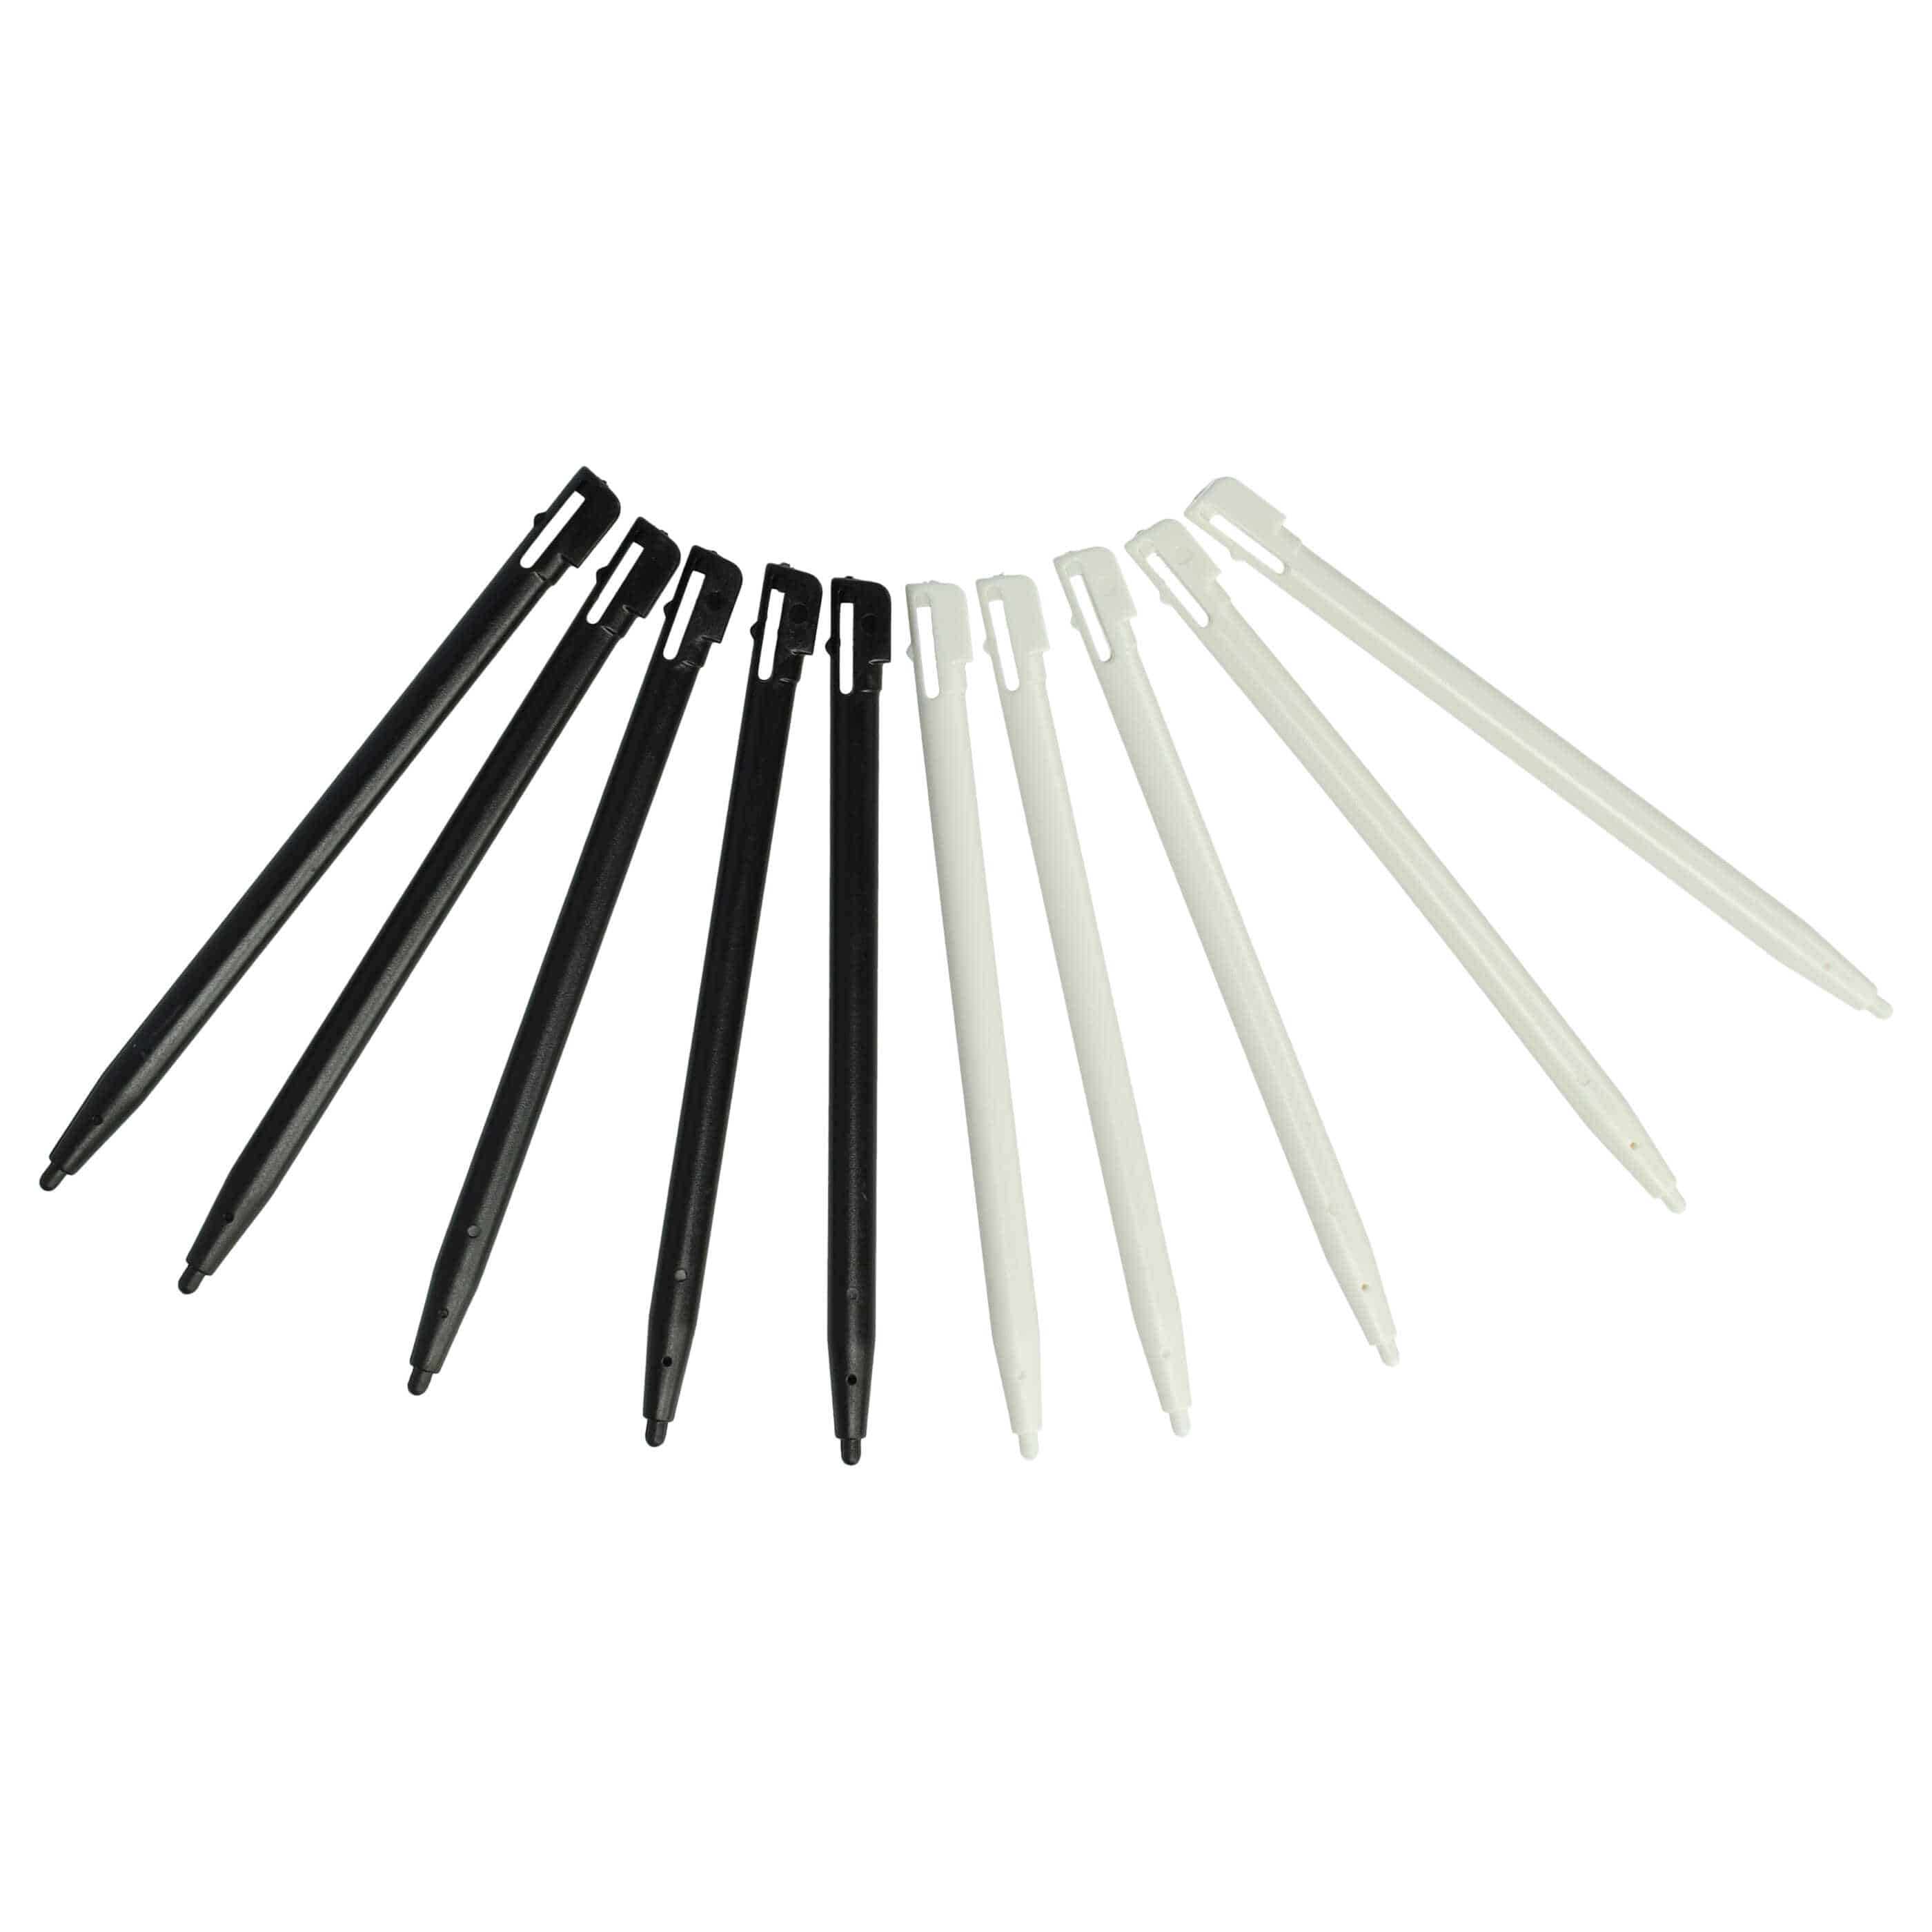 10x Touch Pens suitable for Nintendo DSi, DSi XL, DS Lite Game Console - black, white